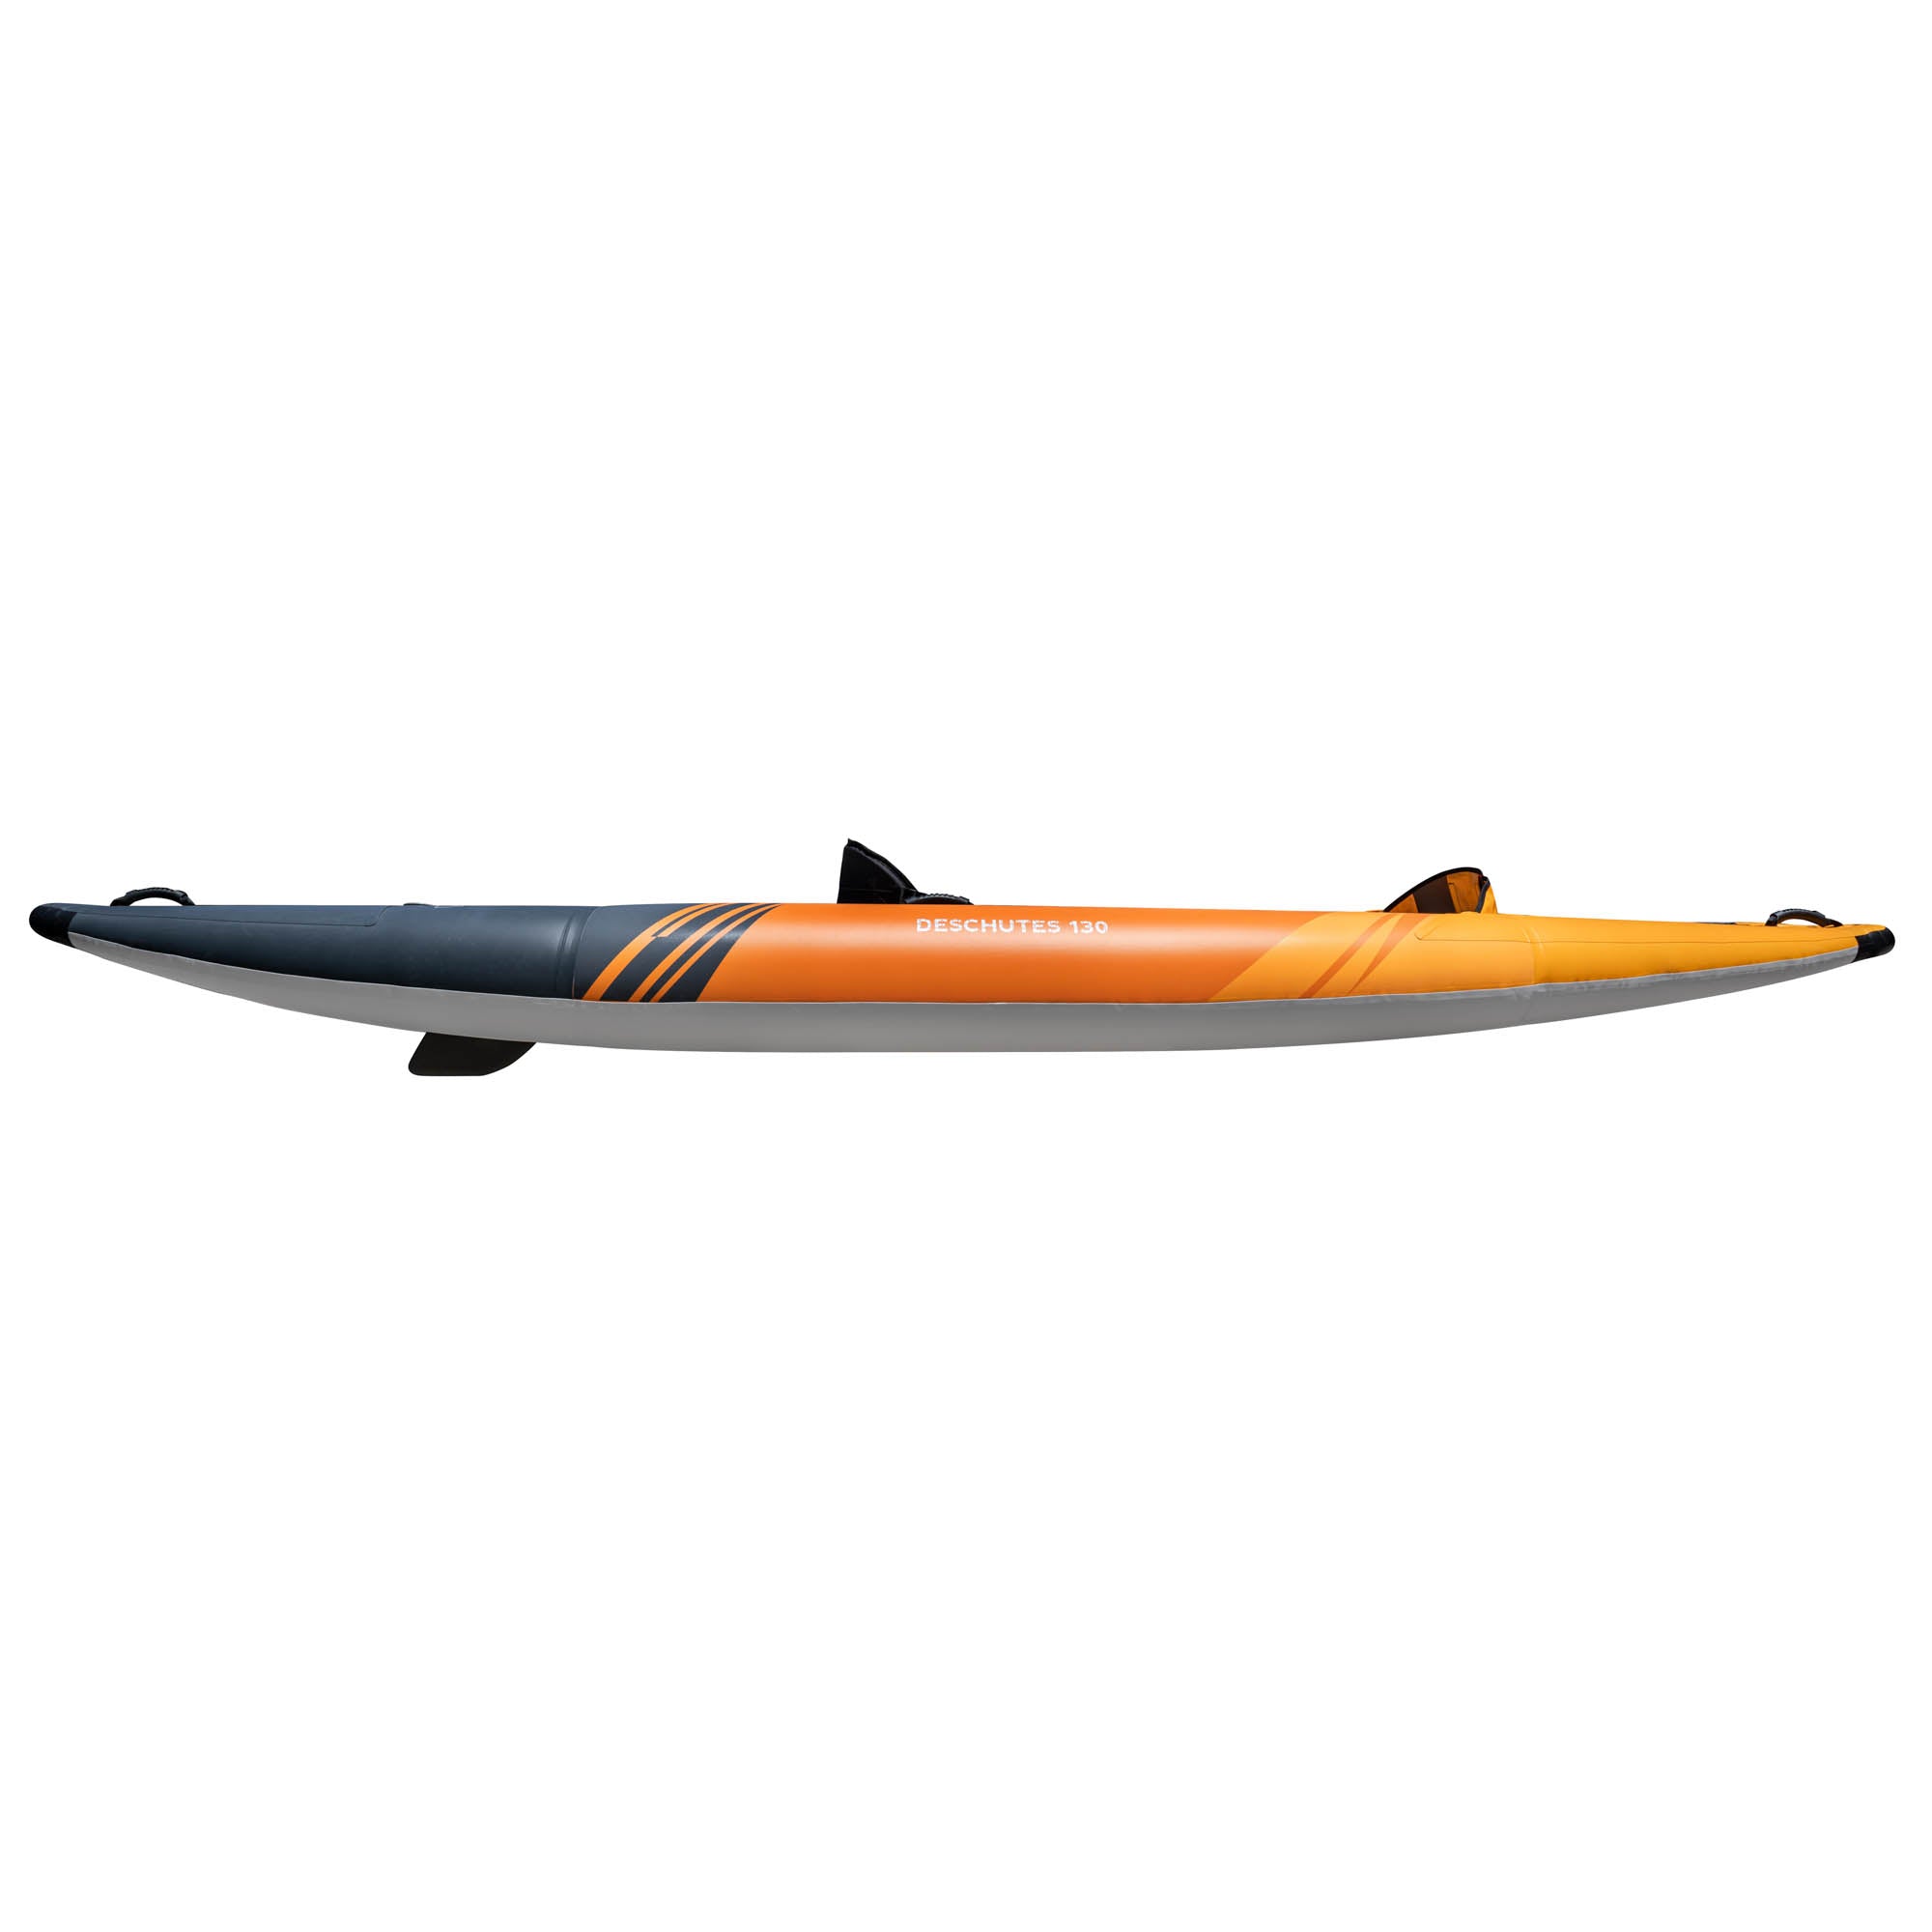 Aquaglide Deschutes 130 Inflatable Kayak - Gear For Adventure